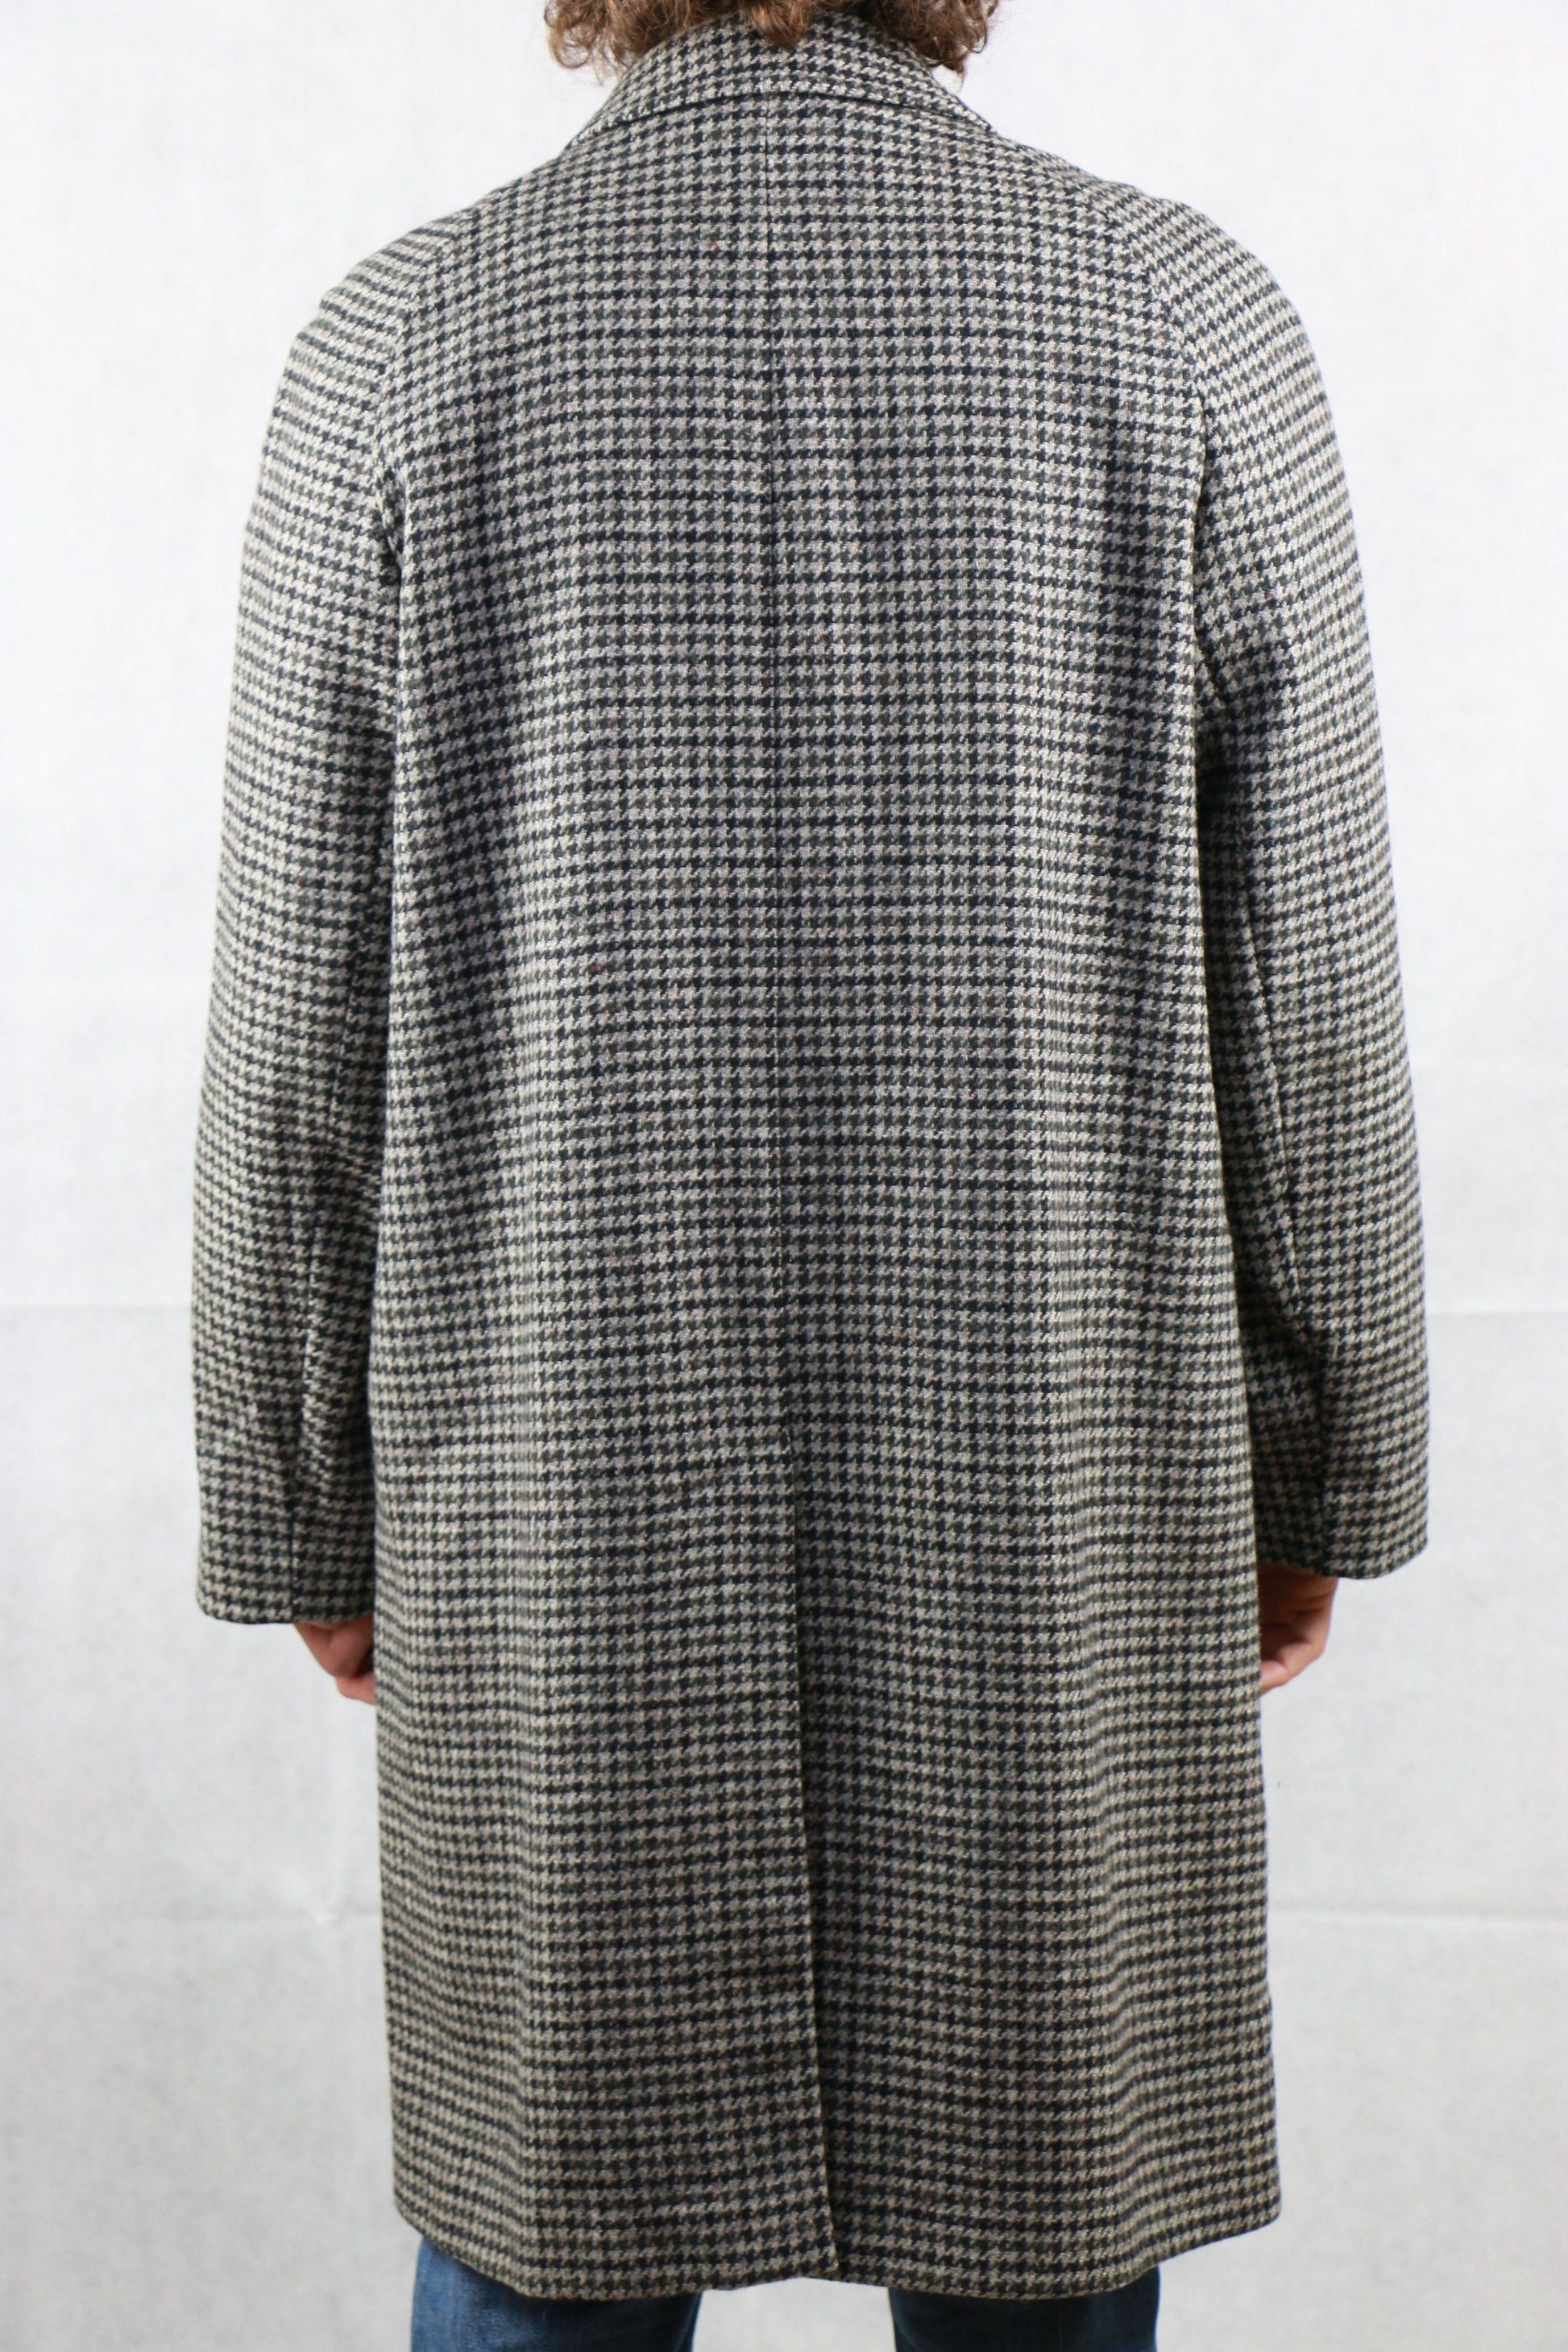 Aquascutum Checkered Tweed Coat - clothing vintage clochard92.com